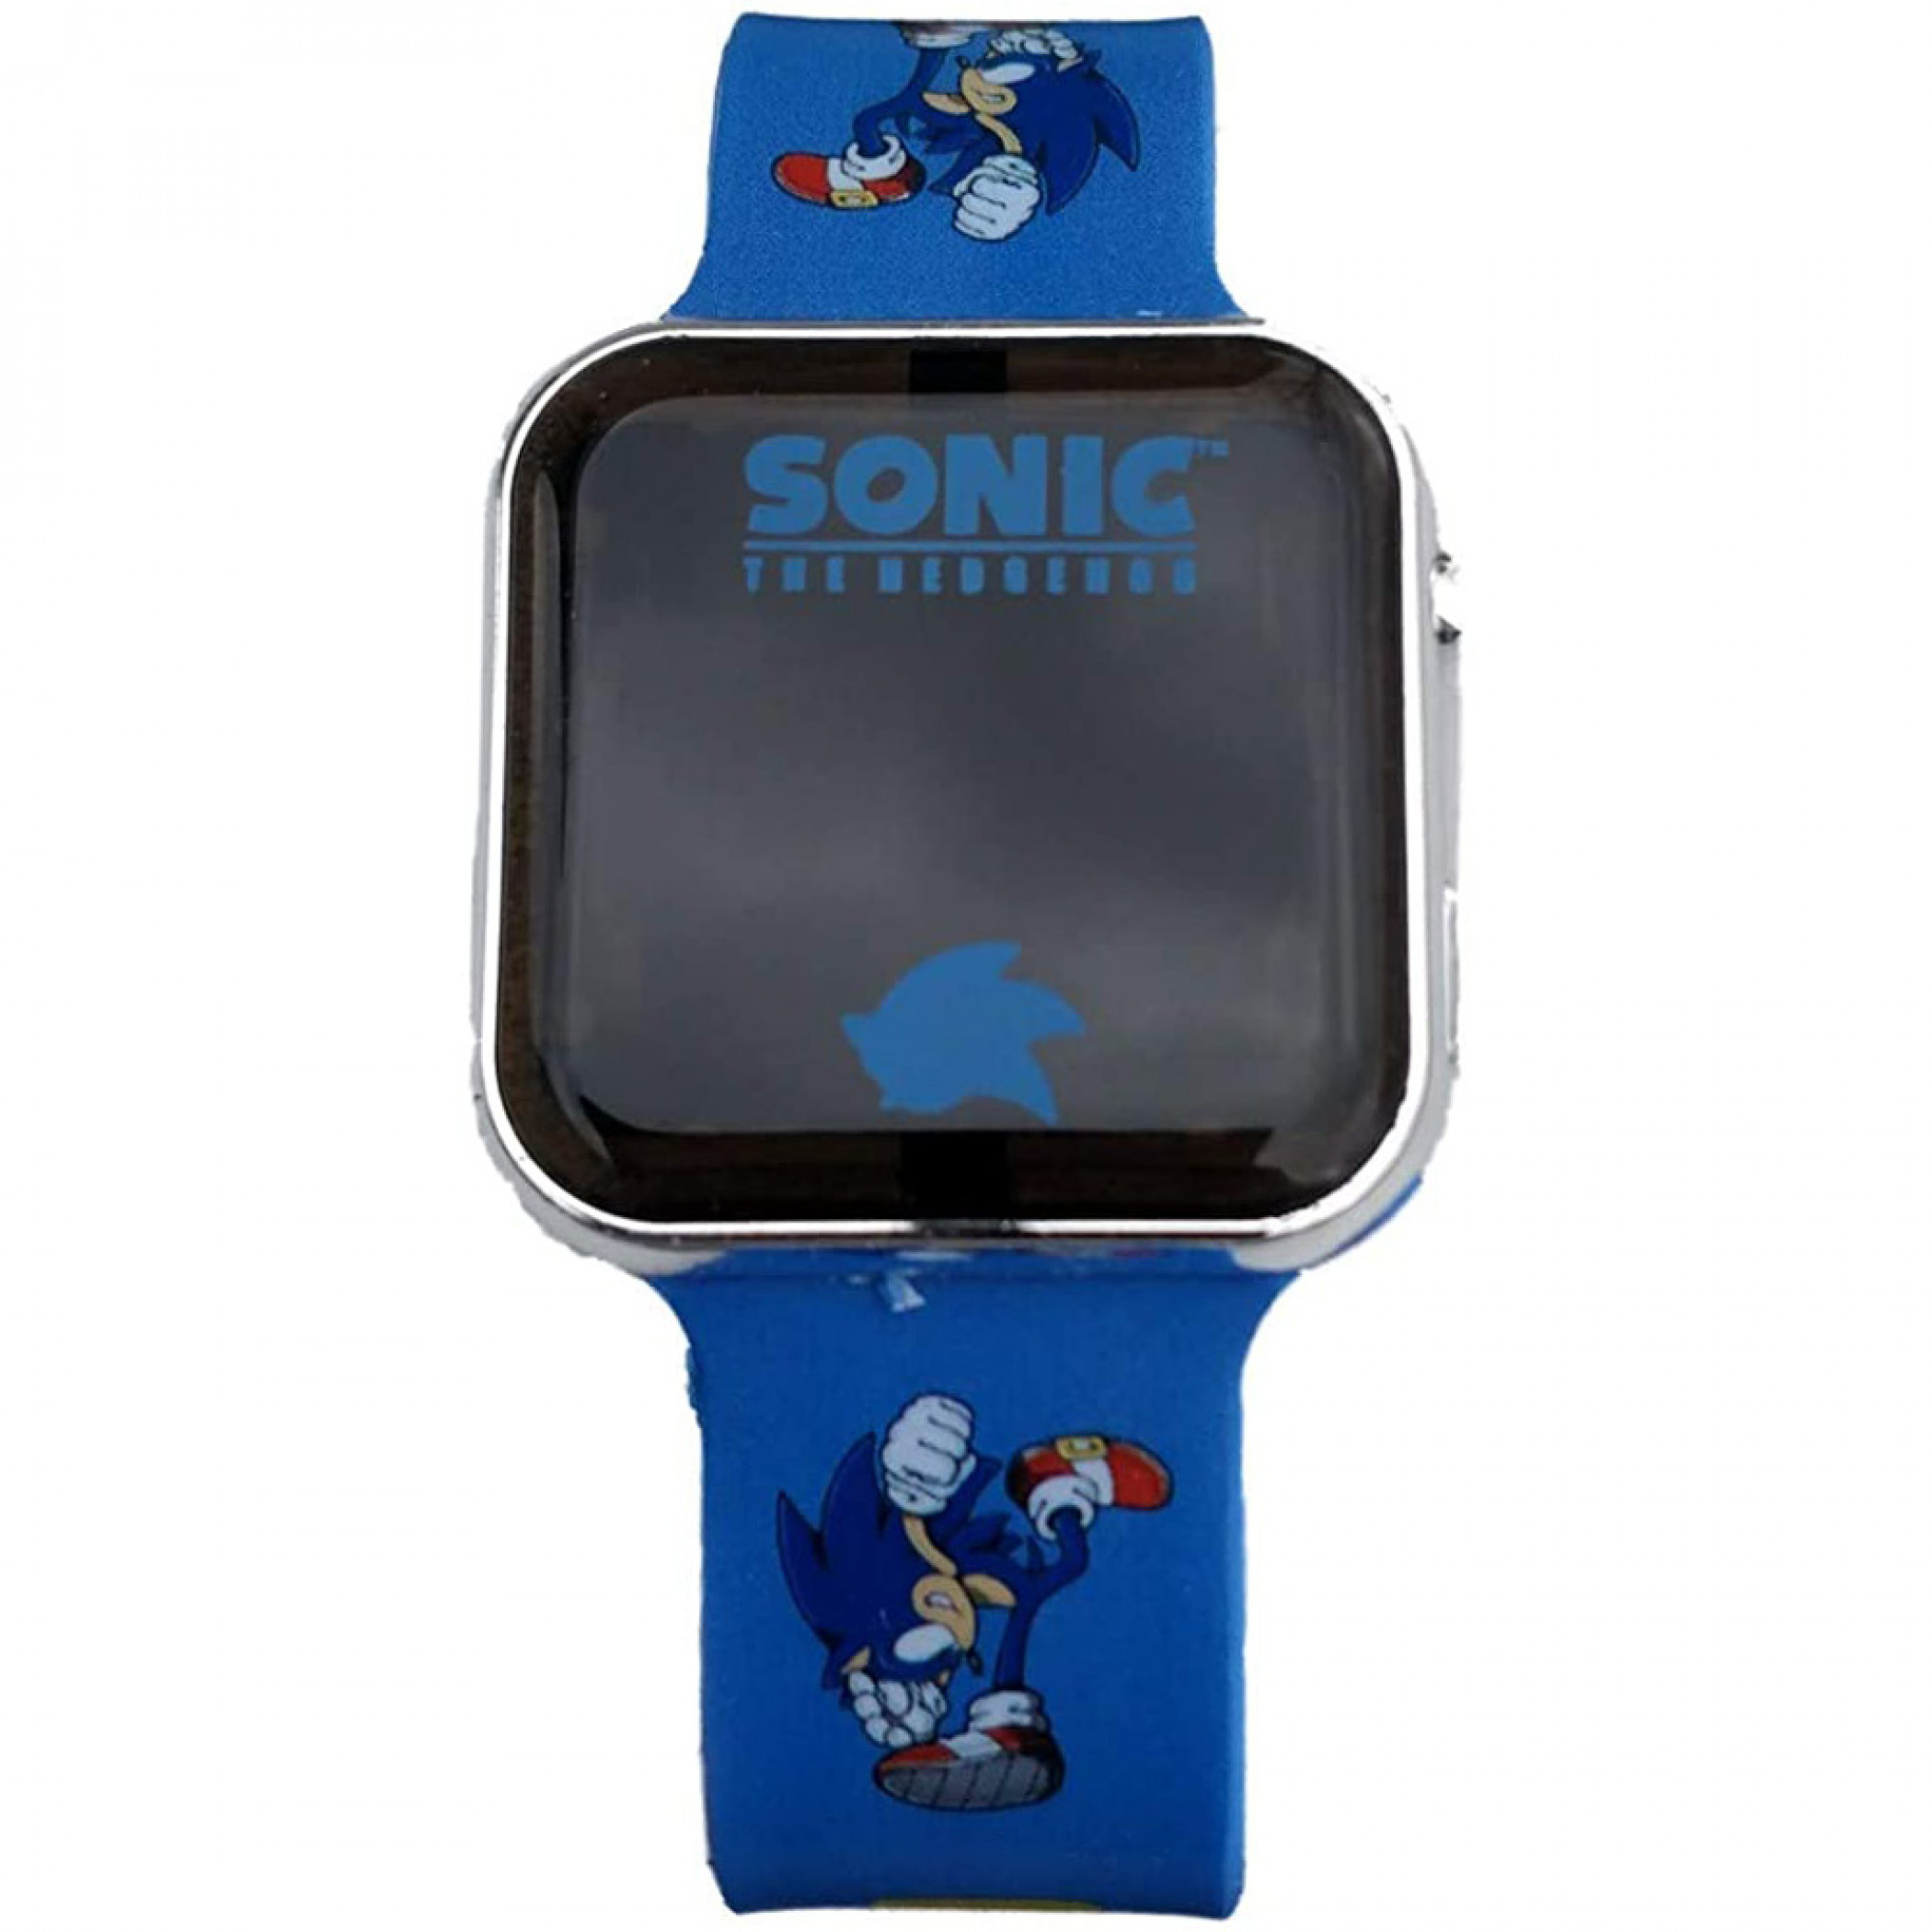 Sonic the Hedgehog Digital Watch w/ 16bit Character Rubber Strap